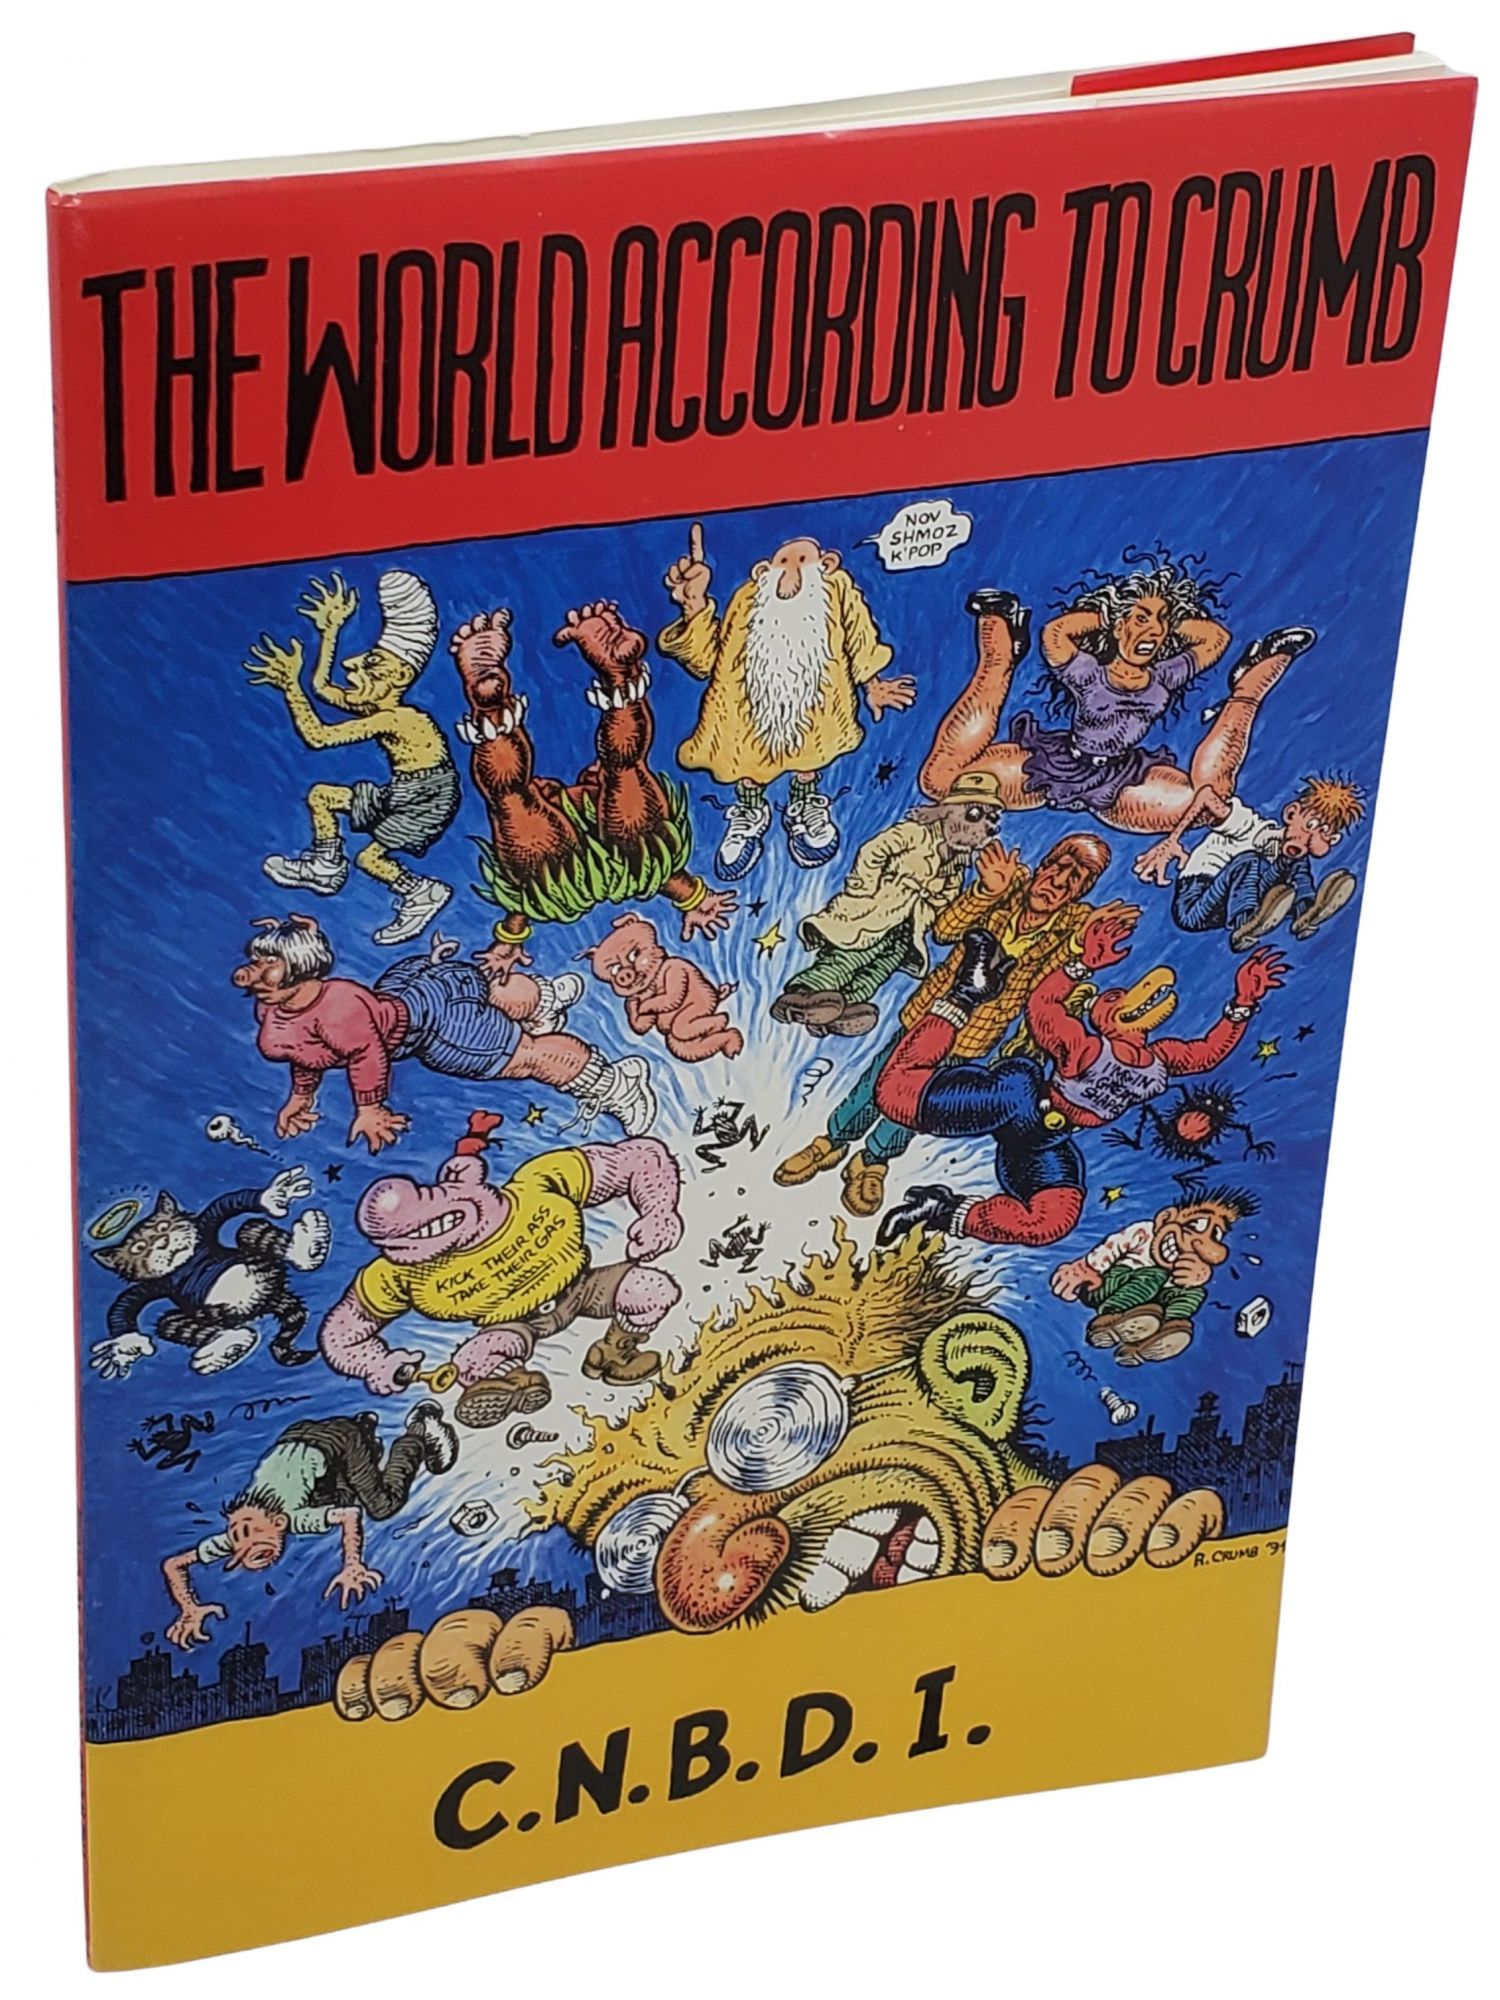 [Book #29700] THE WORLD ACCORDING TO CRUMB (LE MONDE SELON CRUMB). R. Crumb.